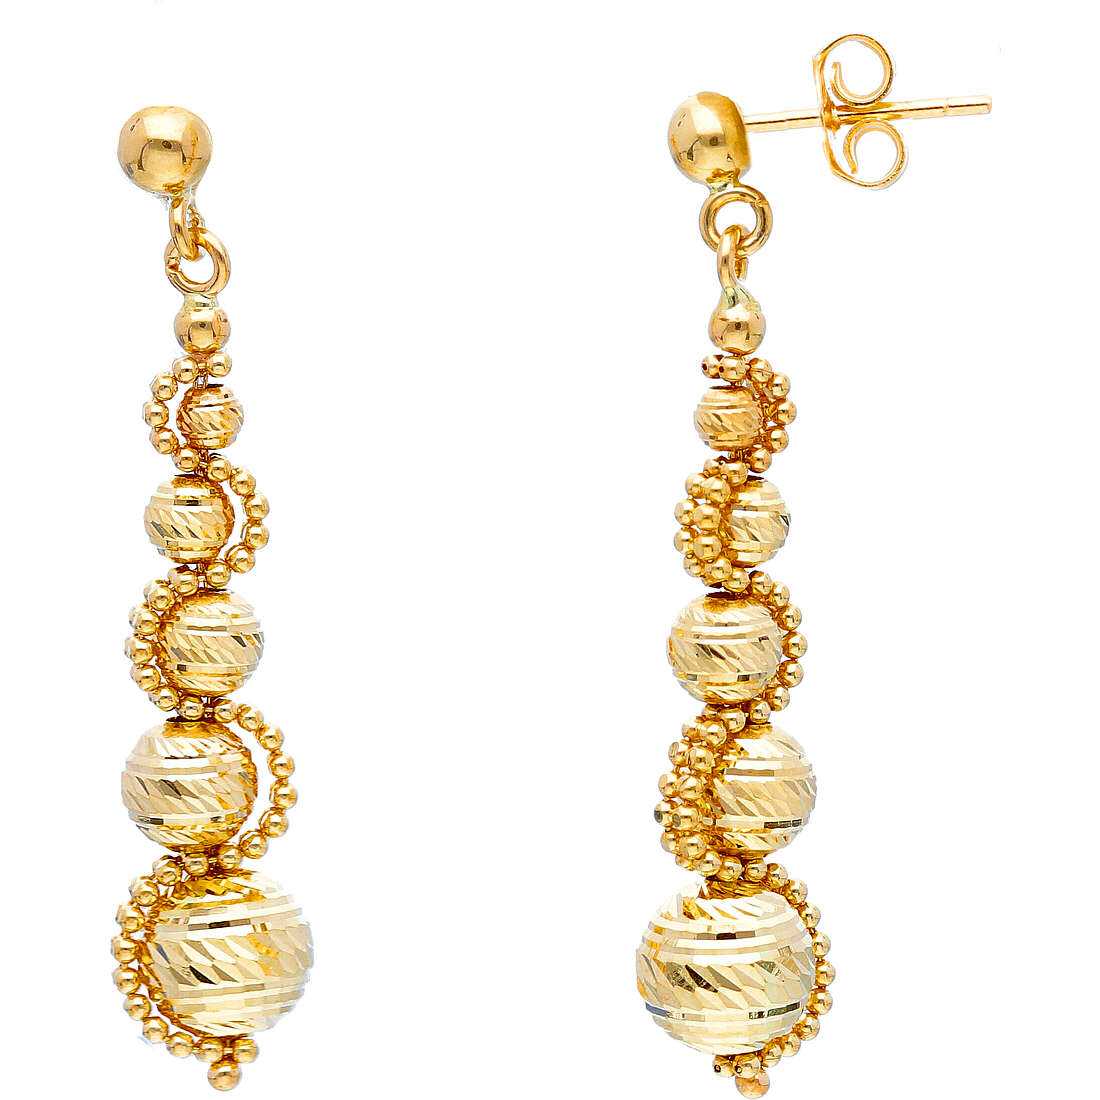 ear-rings woman jewellery GioiaPura Oro 750 GP-S243957